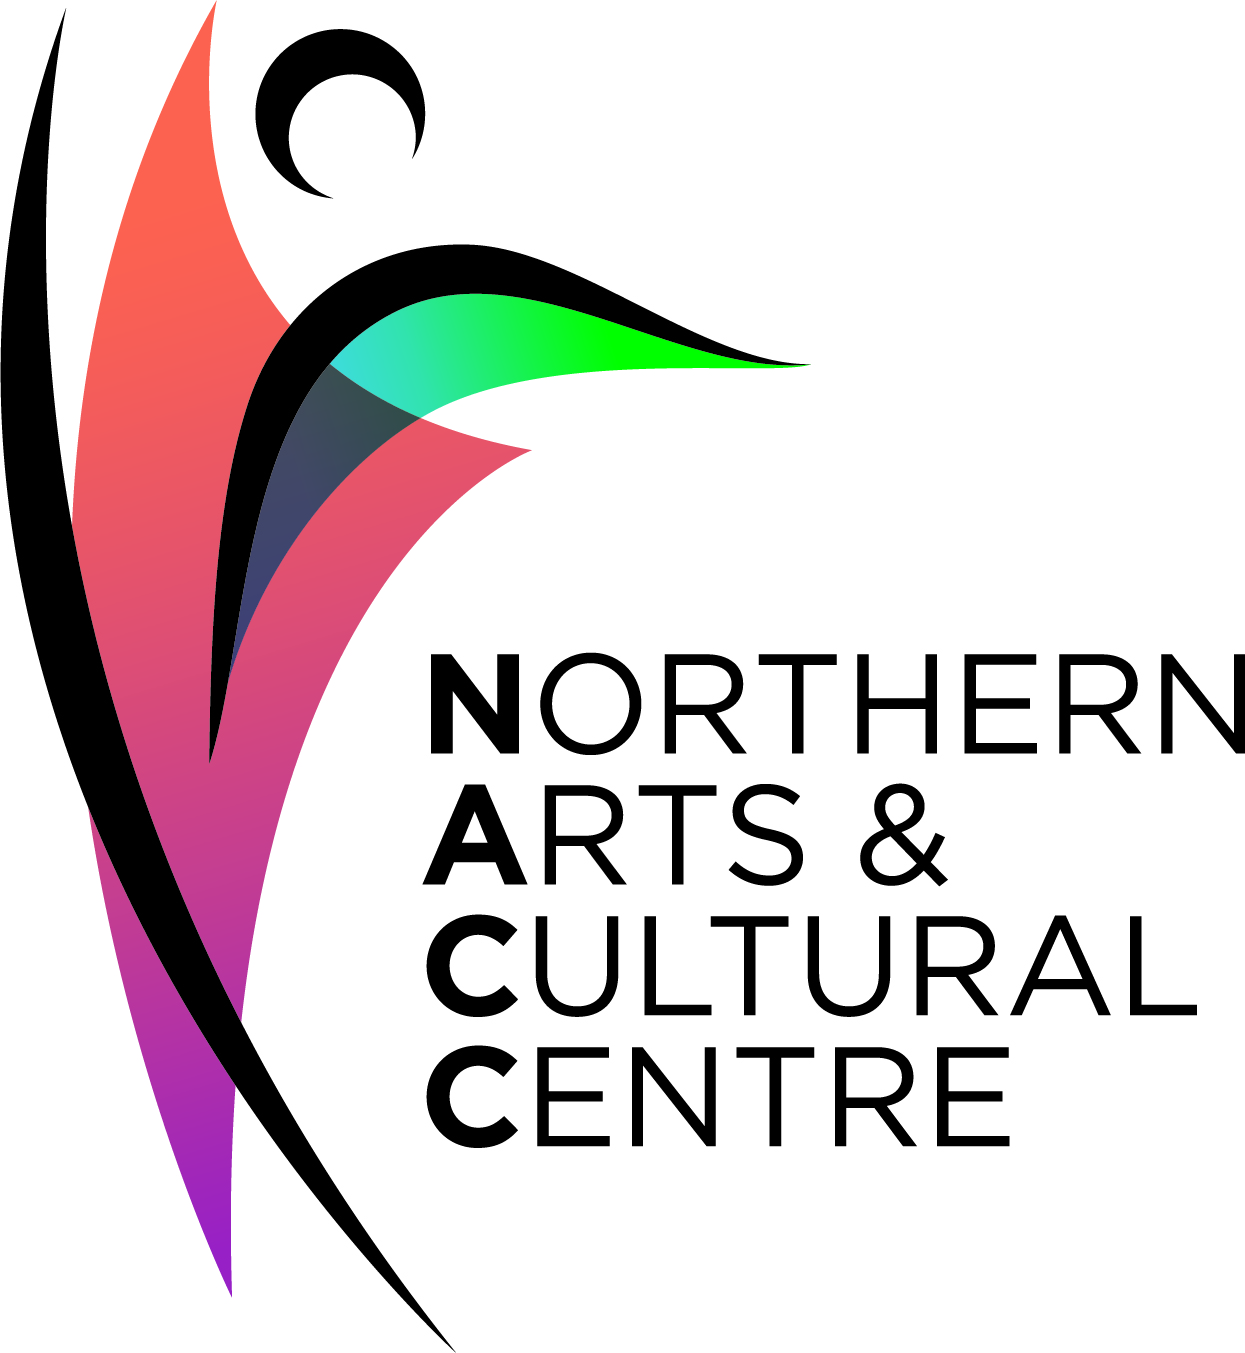 Northern Arts & Cultural Centre